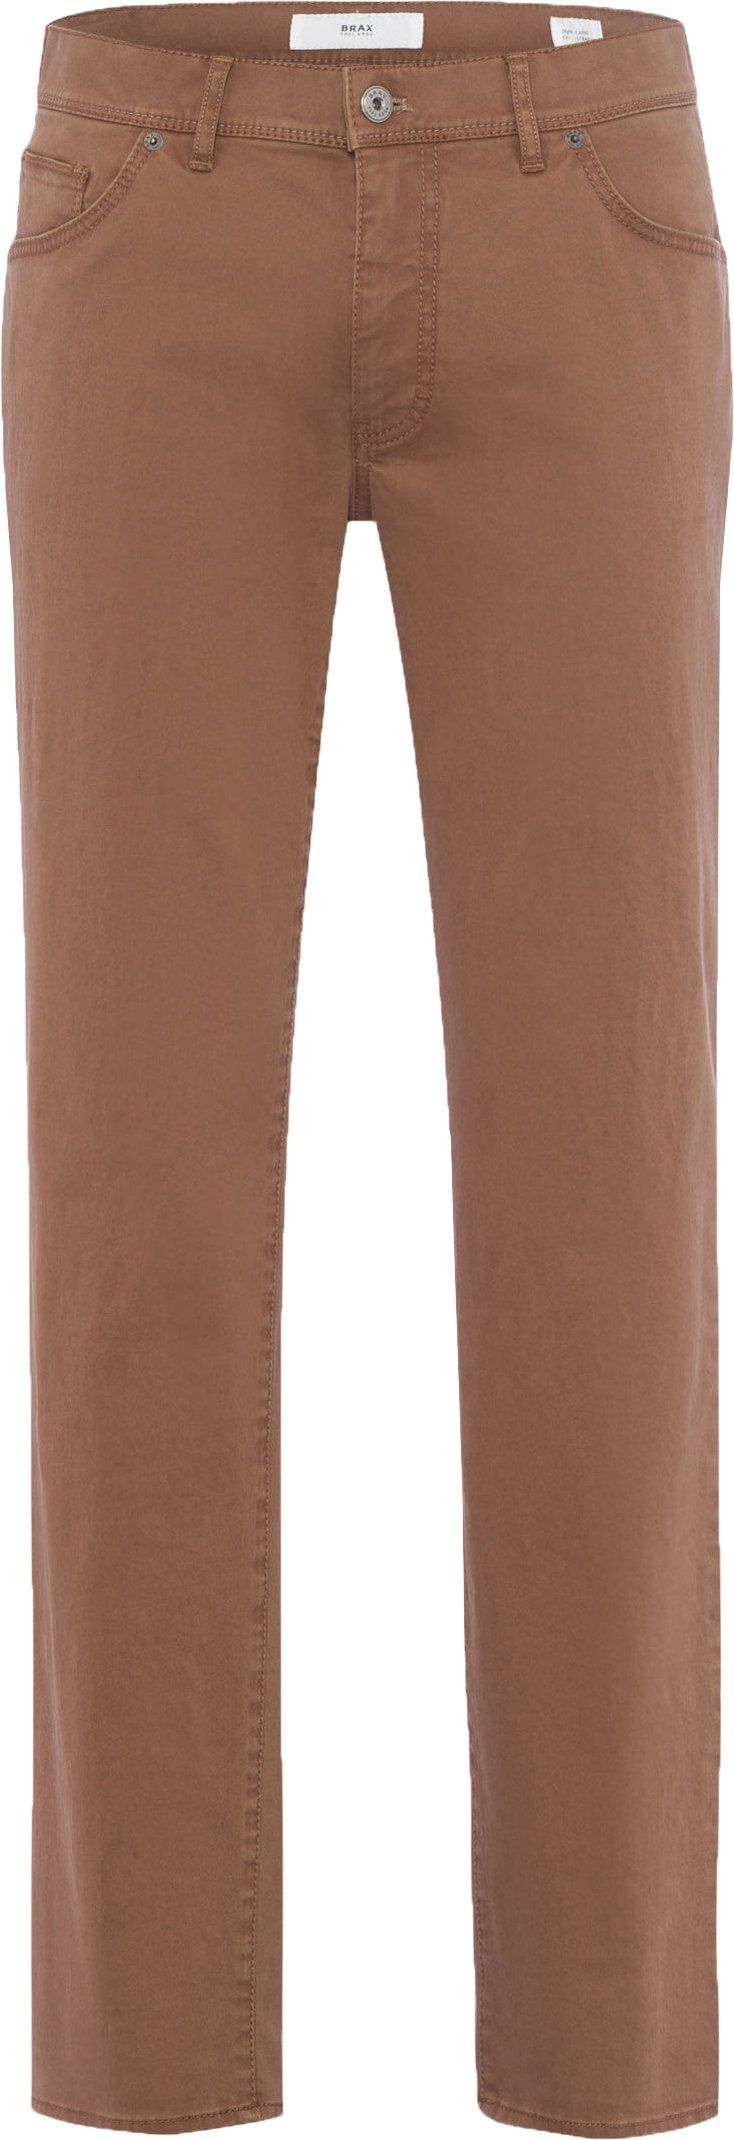 Brax Cadiz Pants Light Brown size W 31